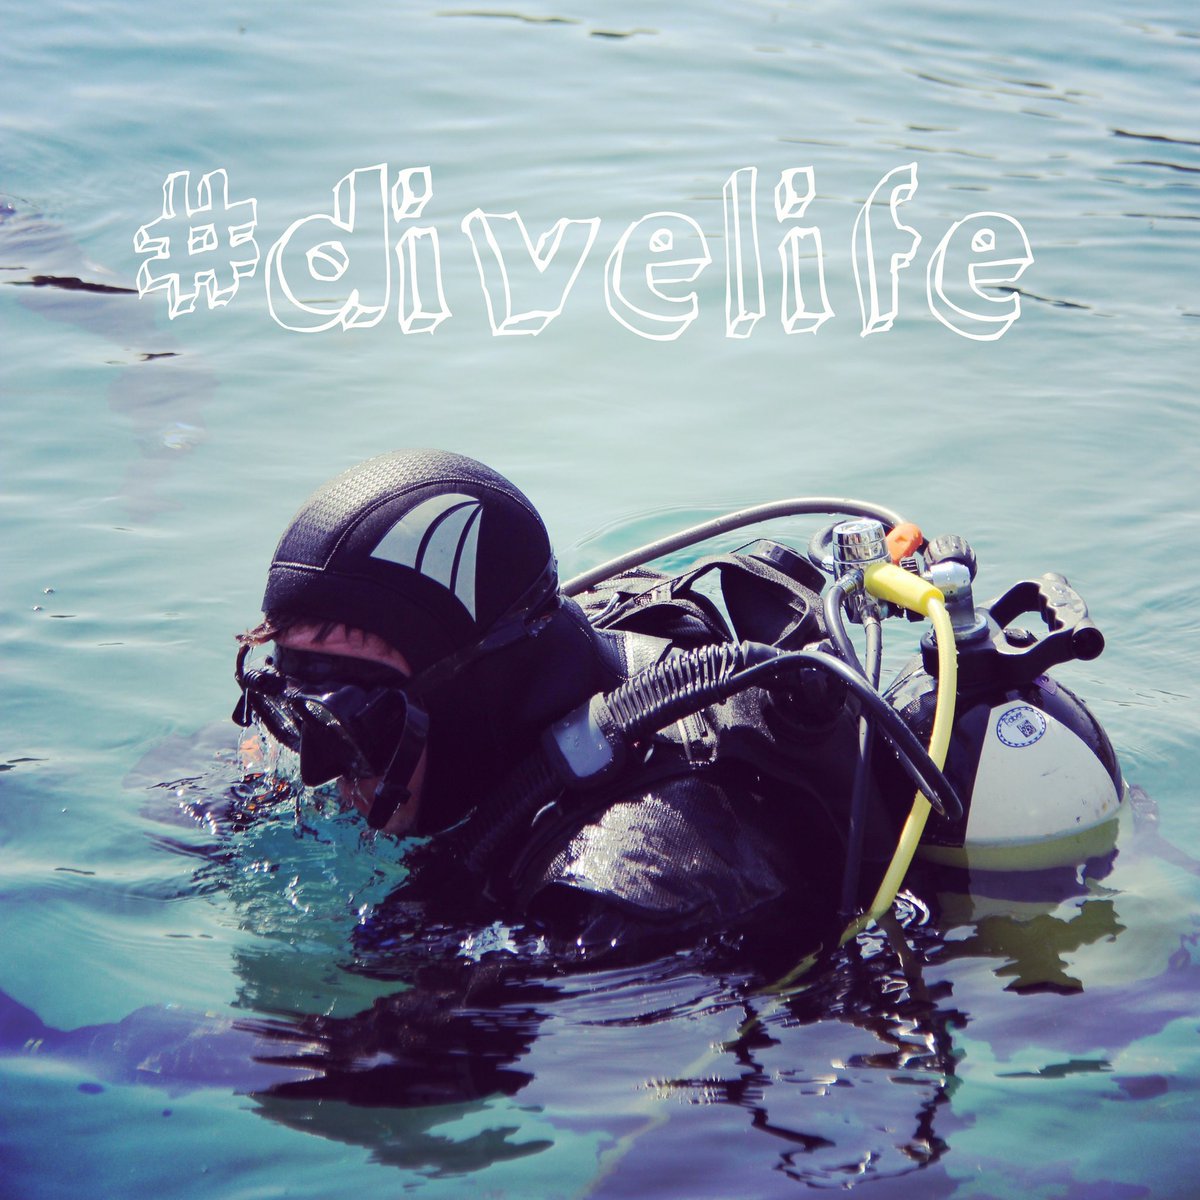 Where are you diving this weekend? 

#divelife #scubadiving #scuba #scubadive #ocean #watersports #diver #underwaterworld #seaworld #dive #scubalife #divedestination